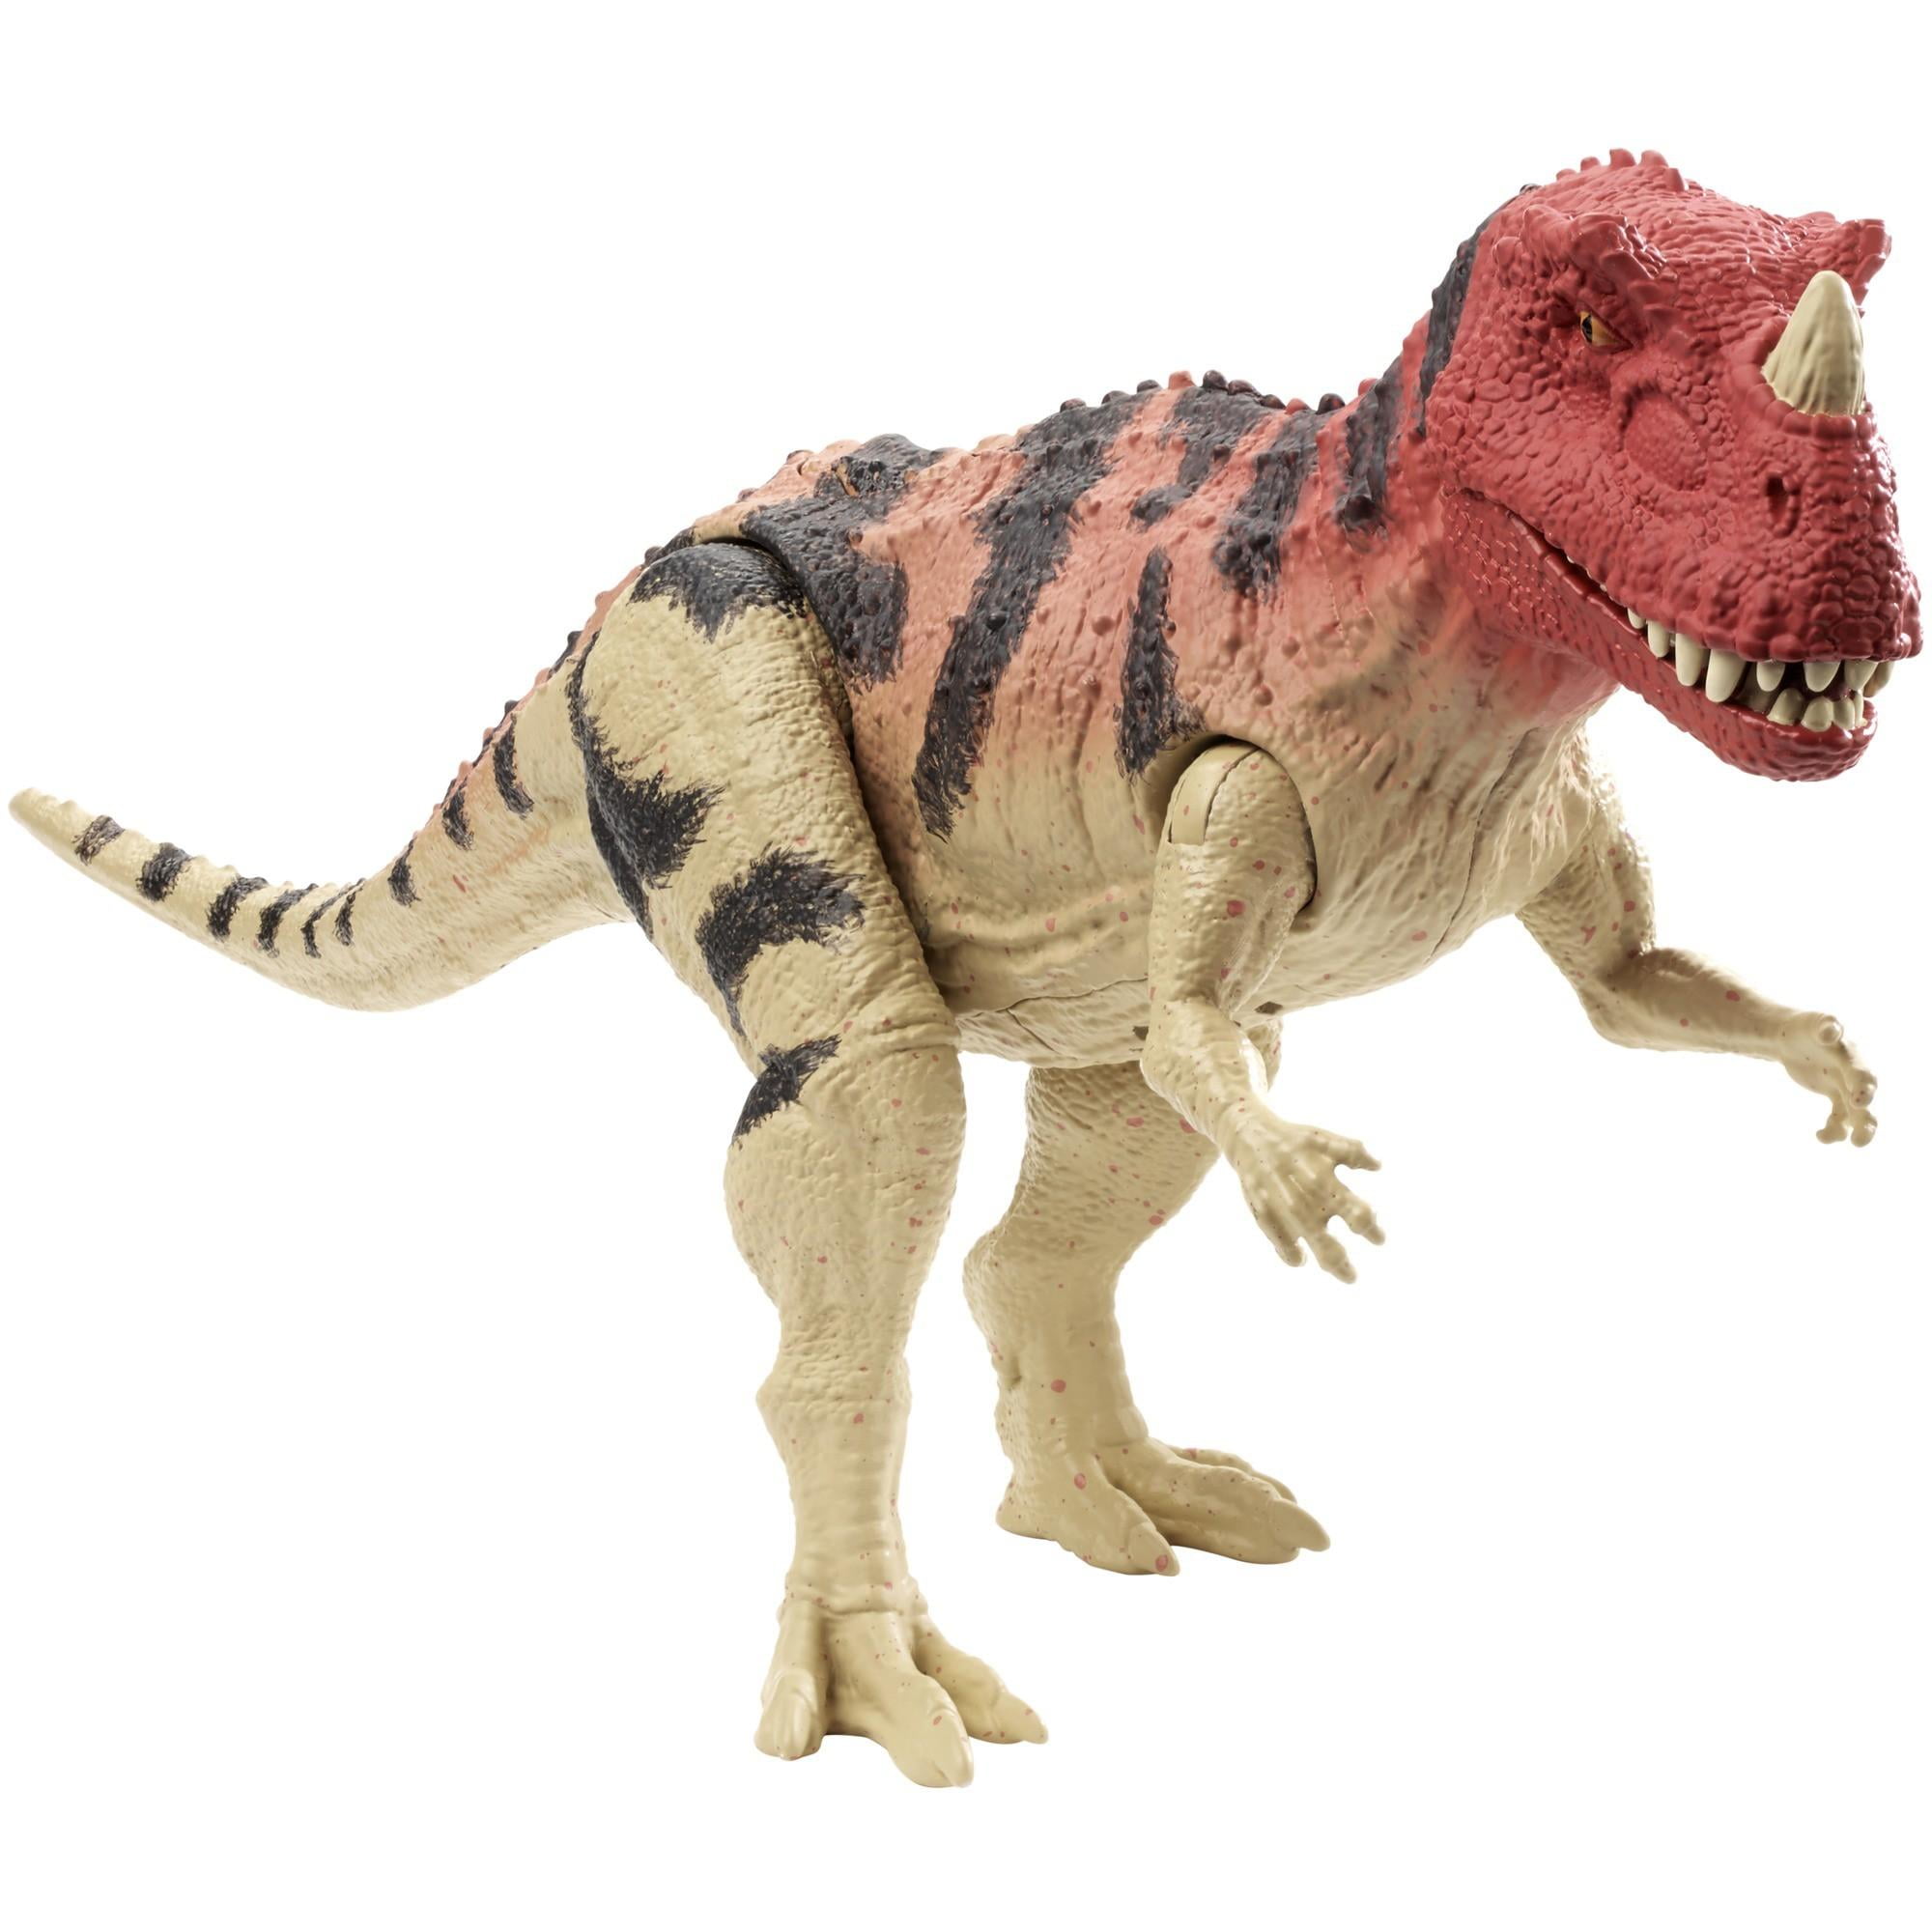 Jurassic World Roarivores Ceratosaurus Dinosaur Action Figure - Walmart.com